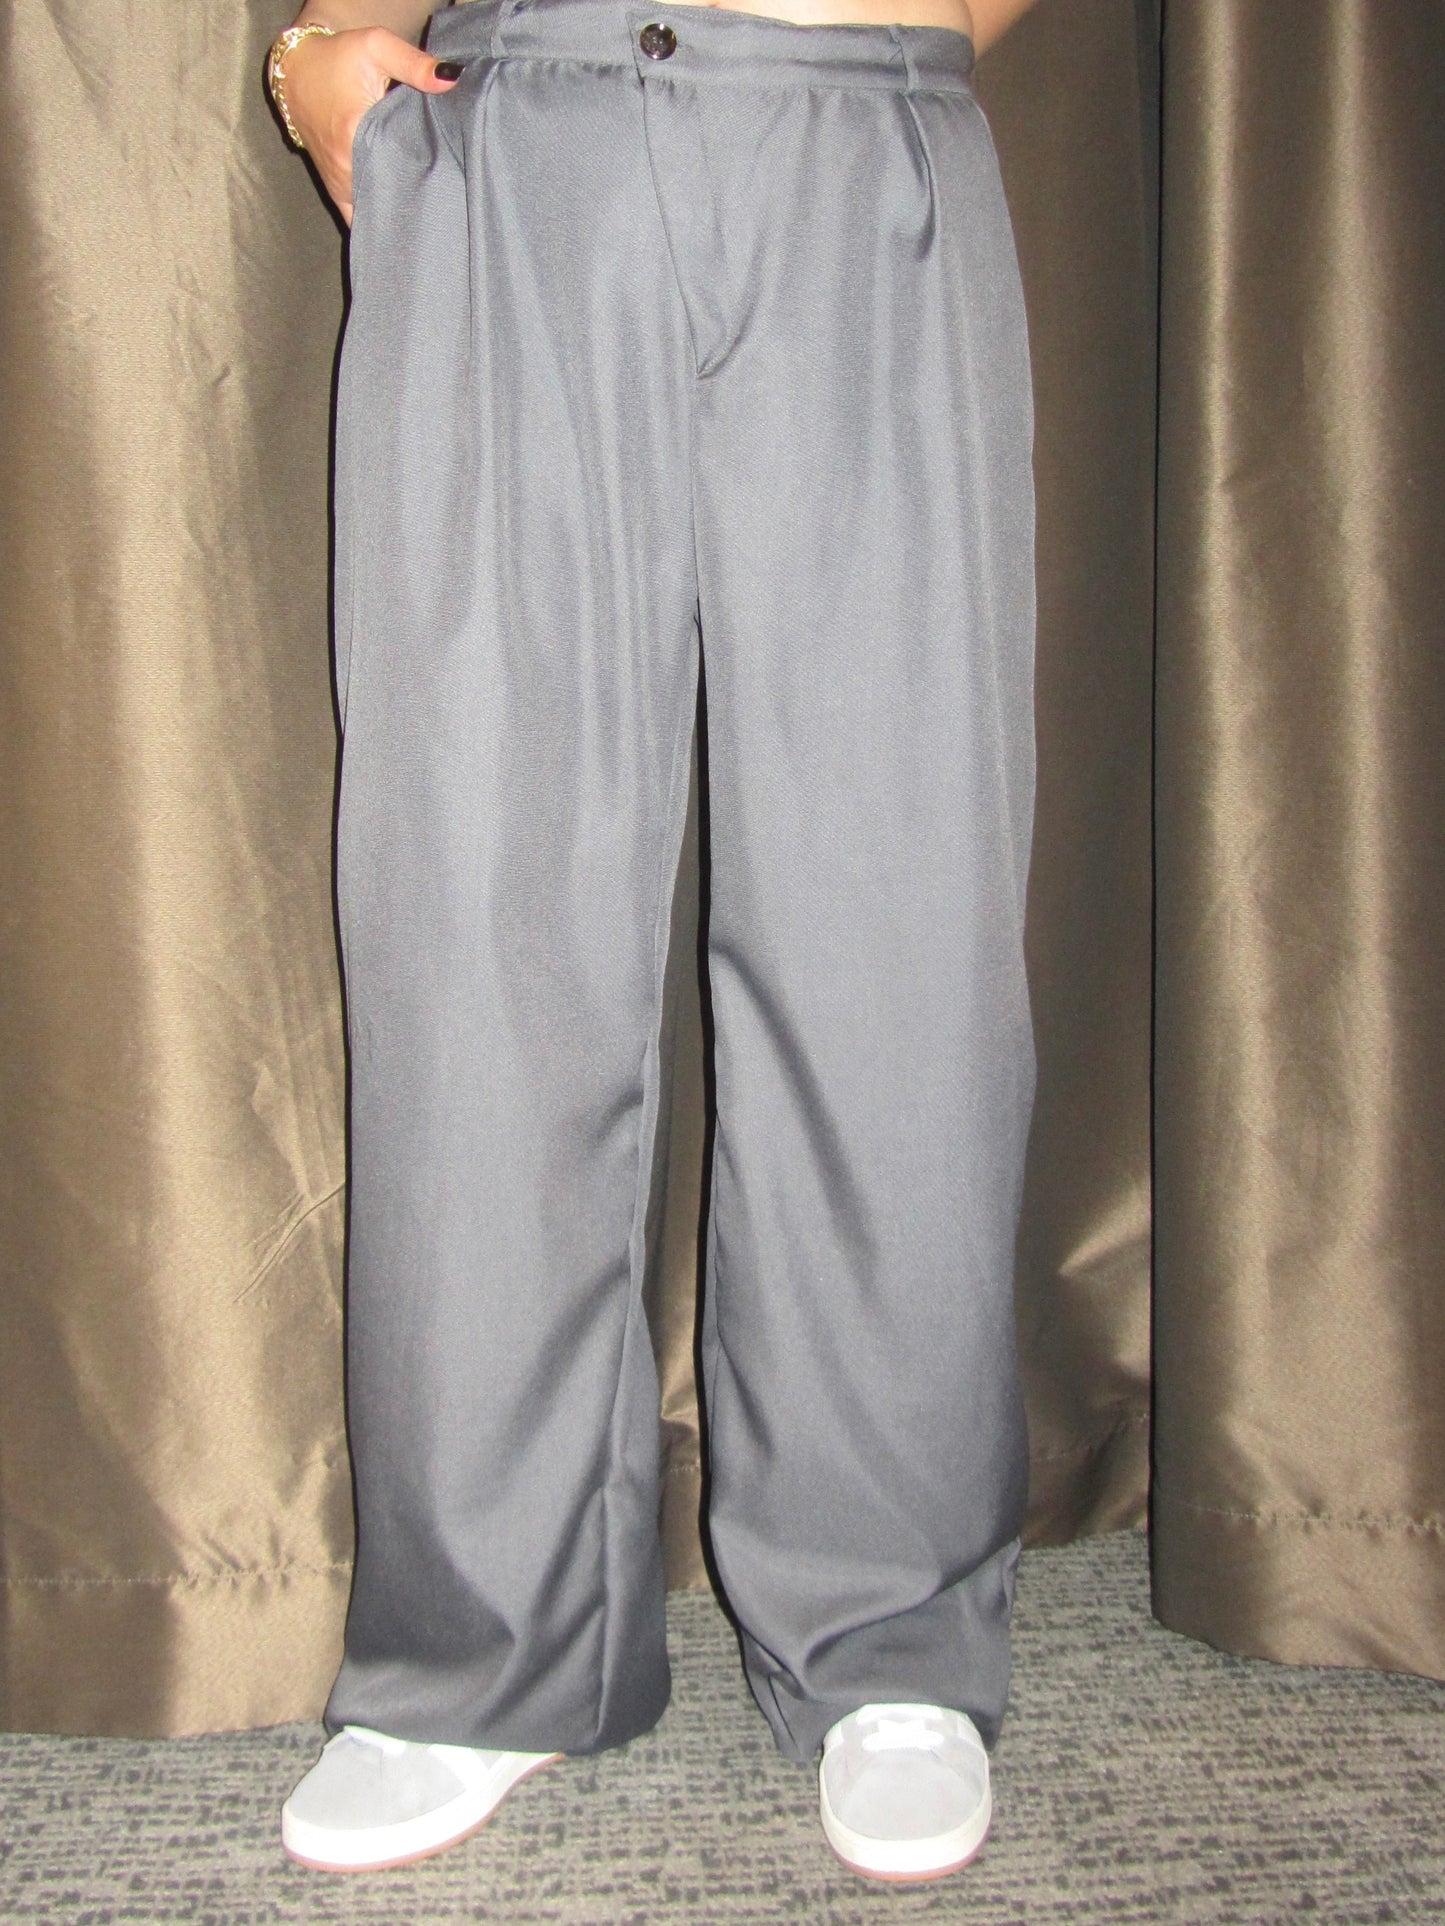 Grey Criss Cross Pants